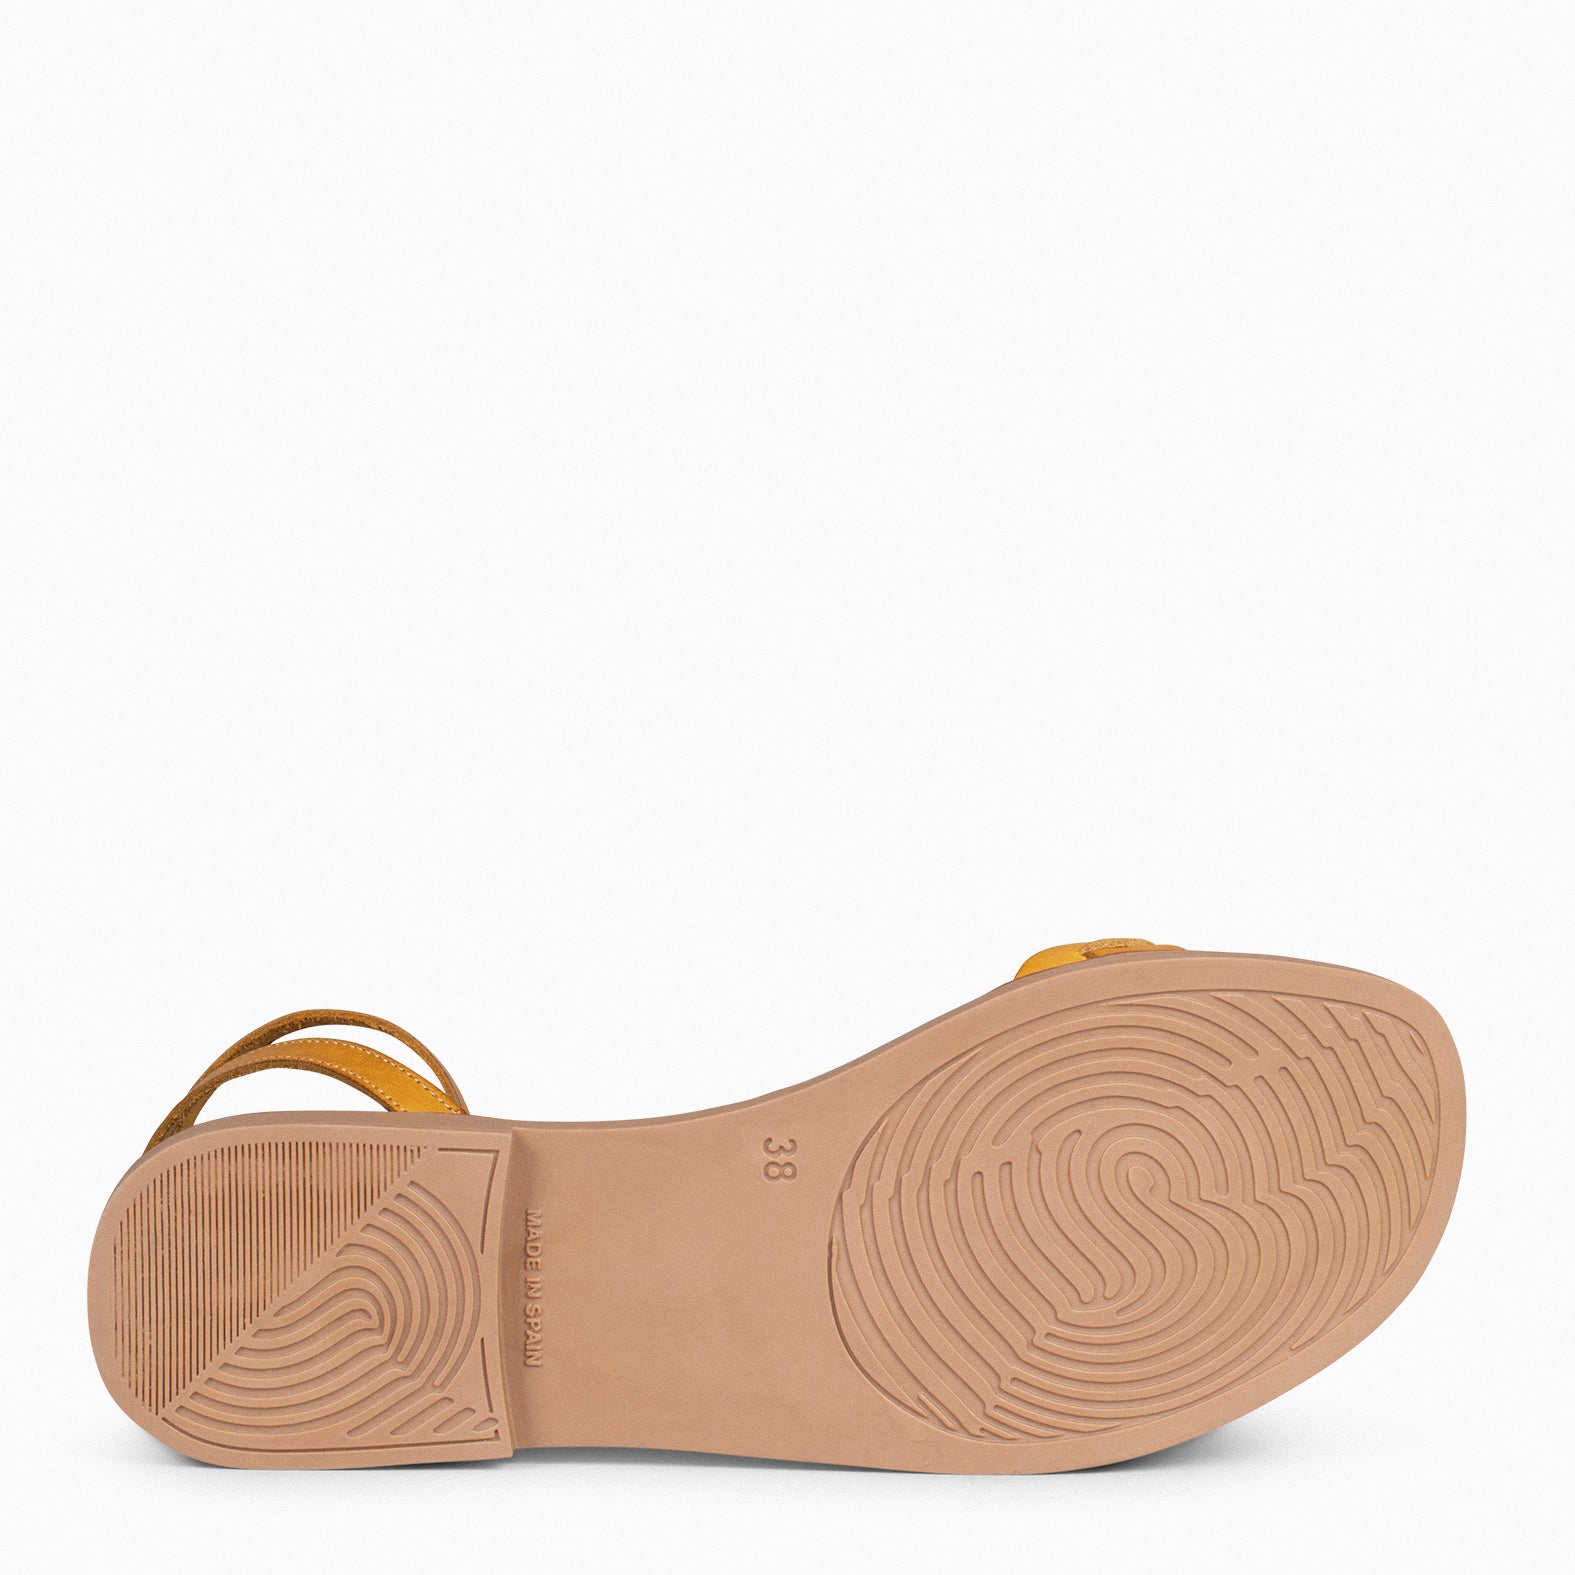 ARECA - MUSTARD  Women's Flat Sandals